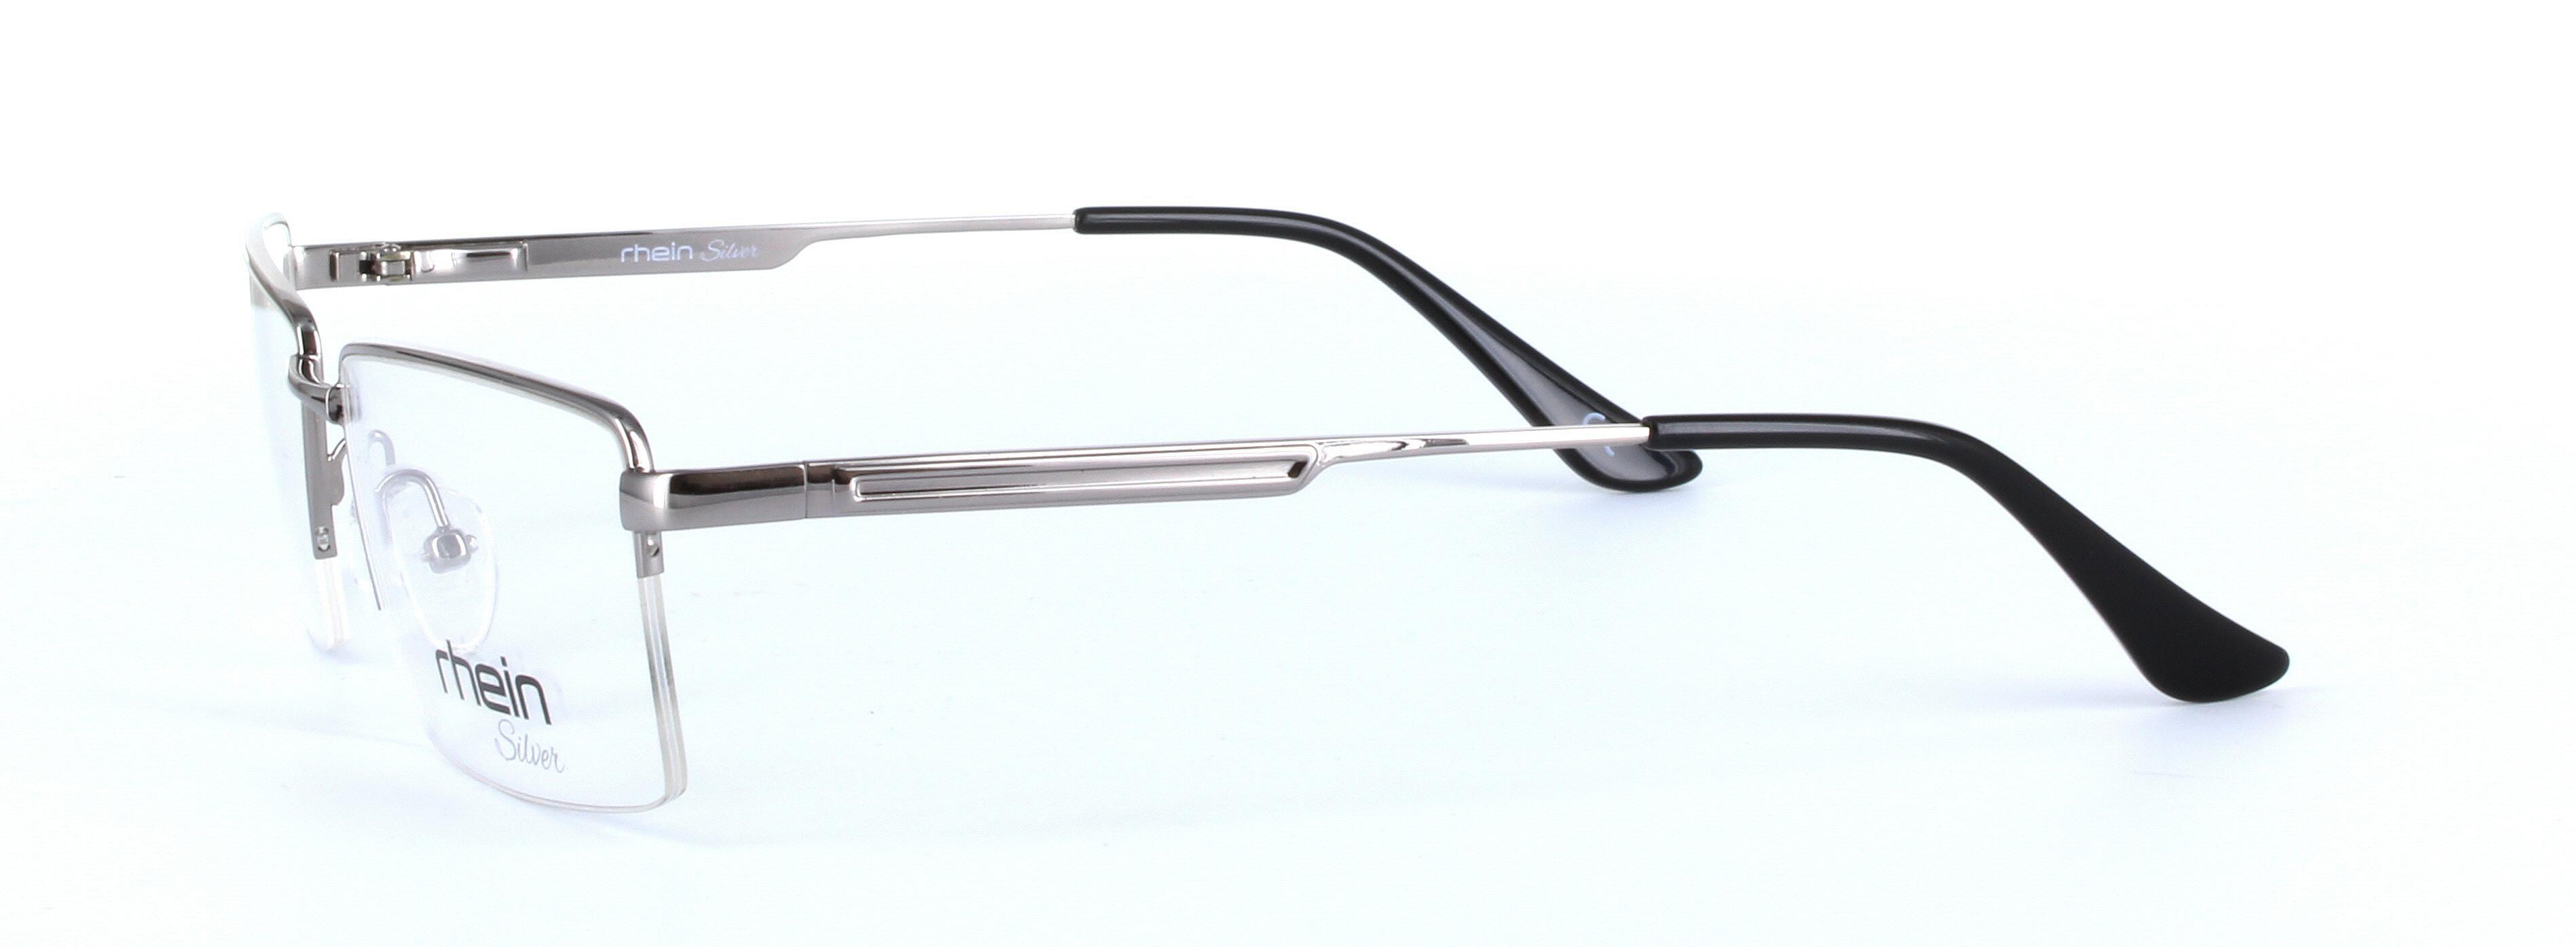 Highfield Gunmetal Semi Rimless Rectangular Metal Glasses - Image View 2